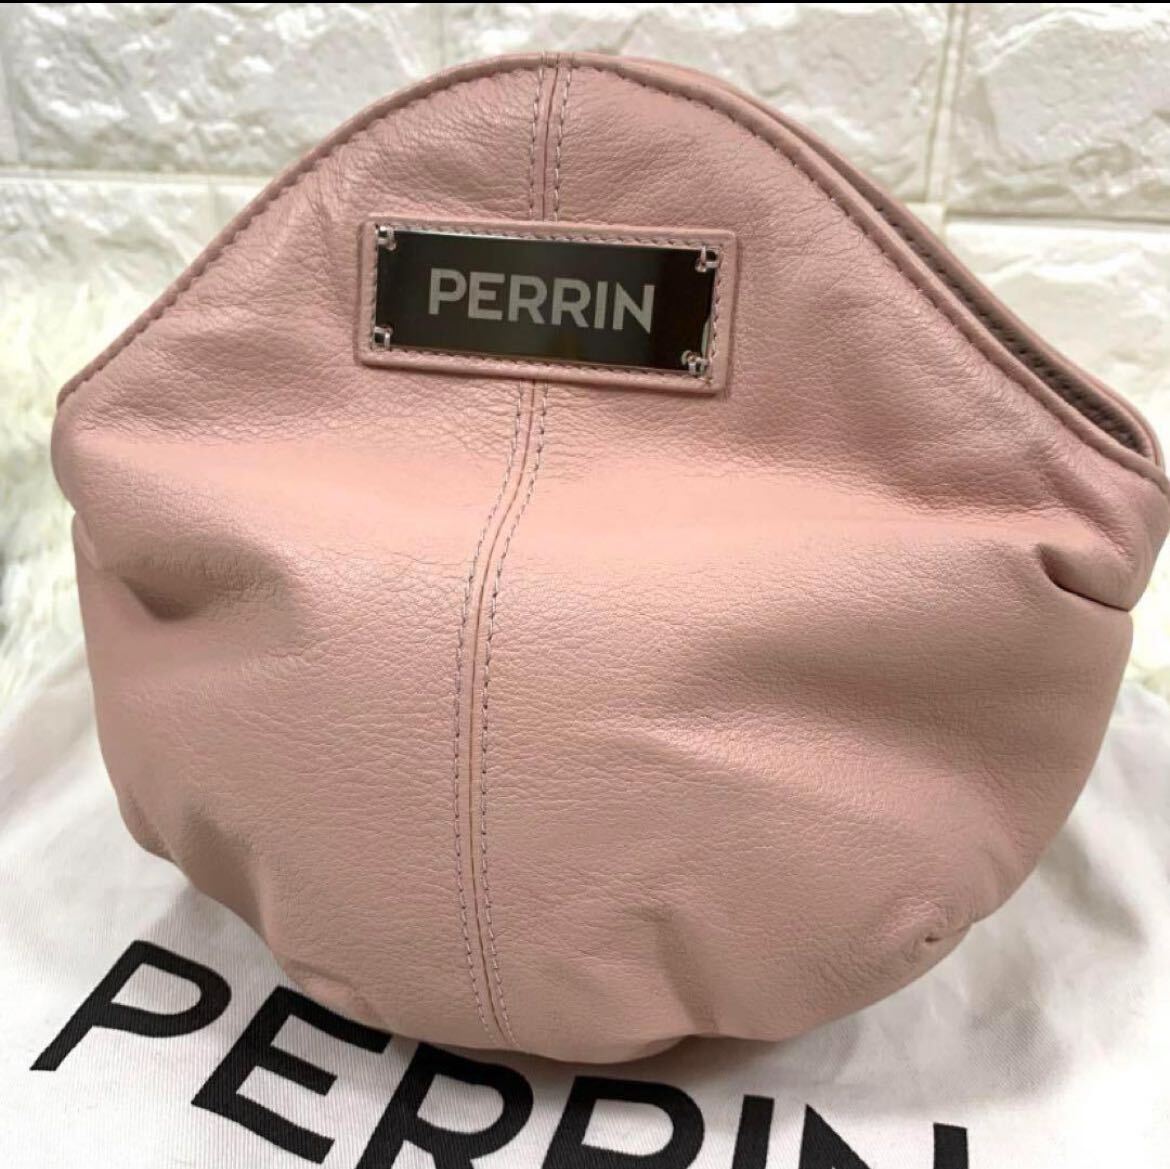  превосходный товар Perrin Paris винт n Париж сумка на плечо LE PETIT PANIER кринолин редкий 